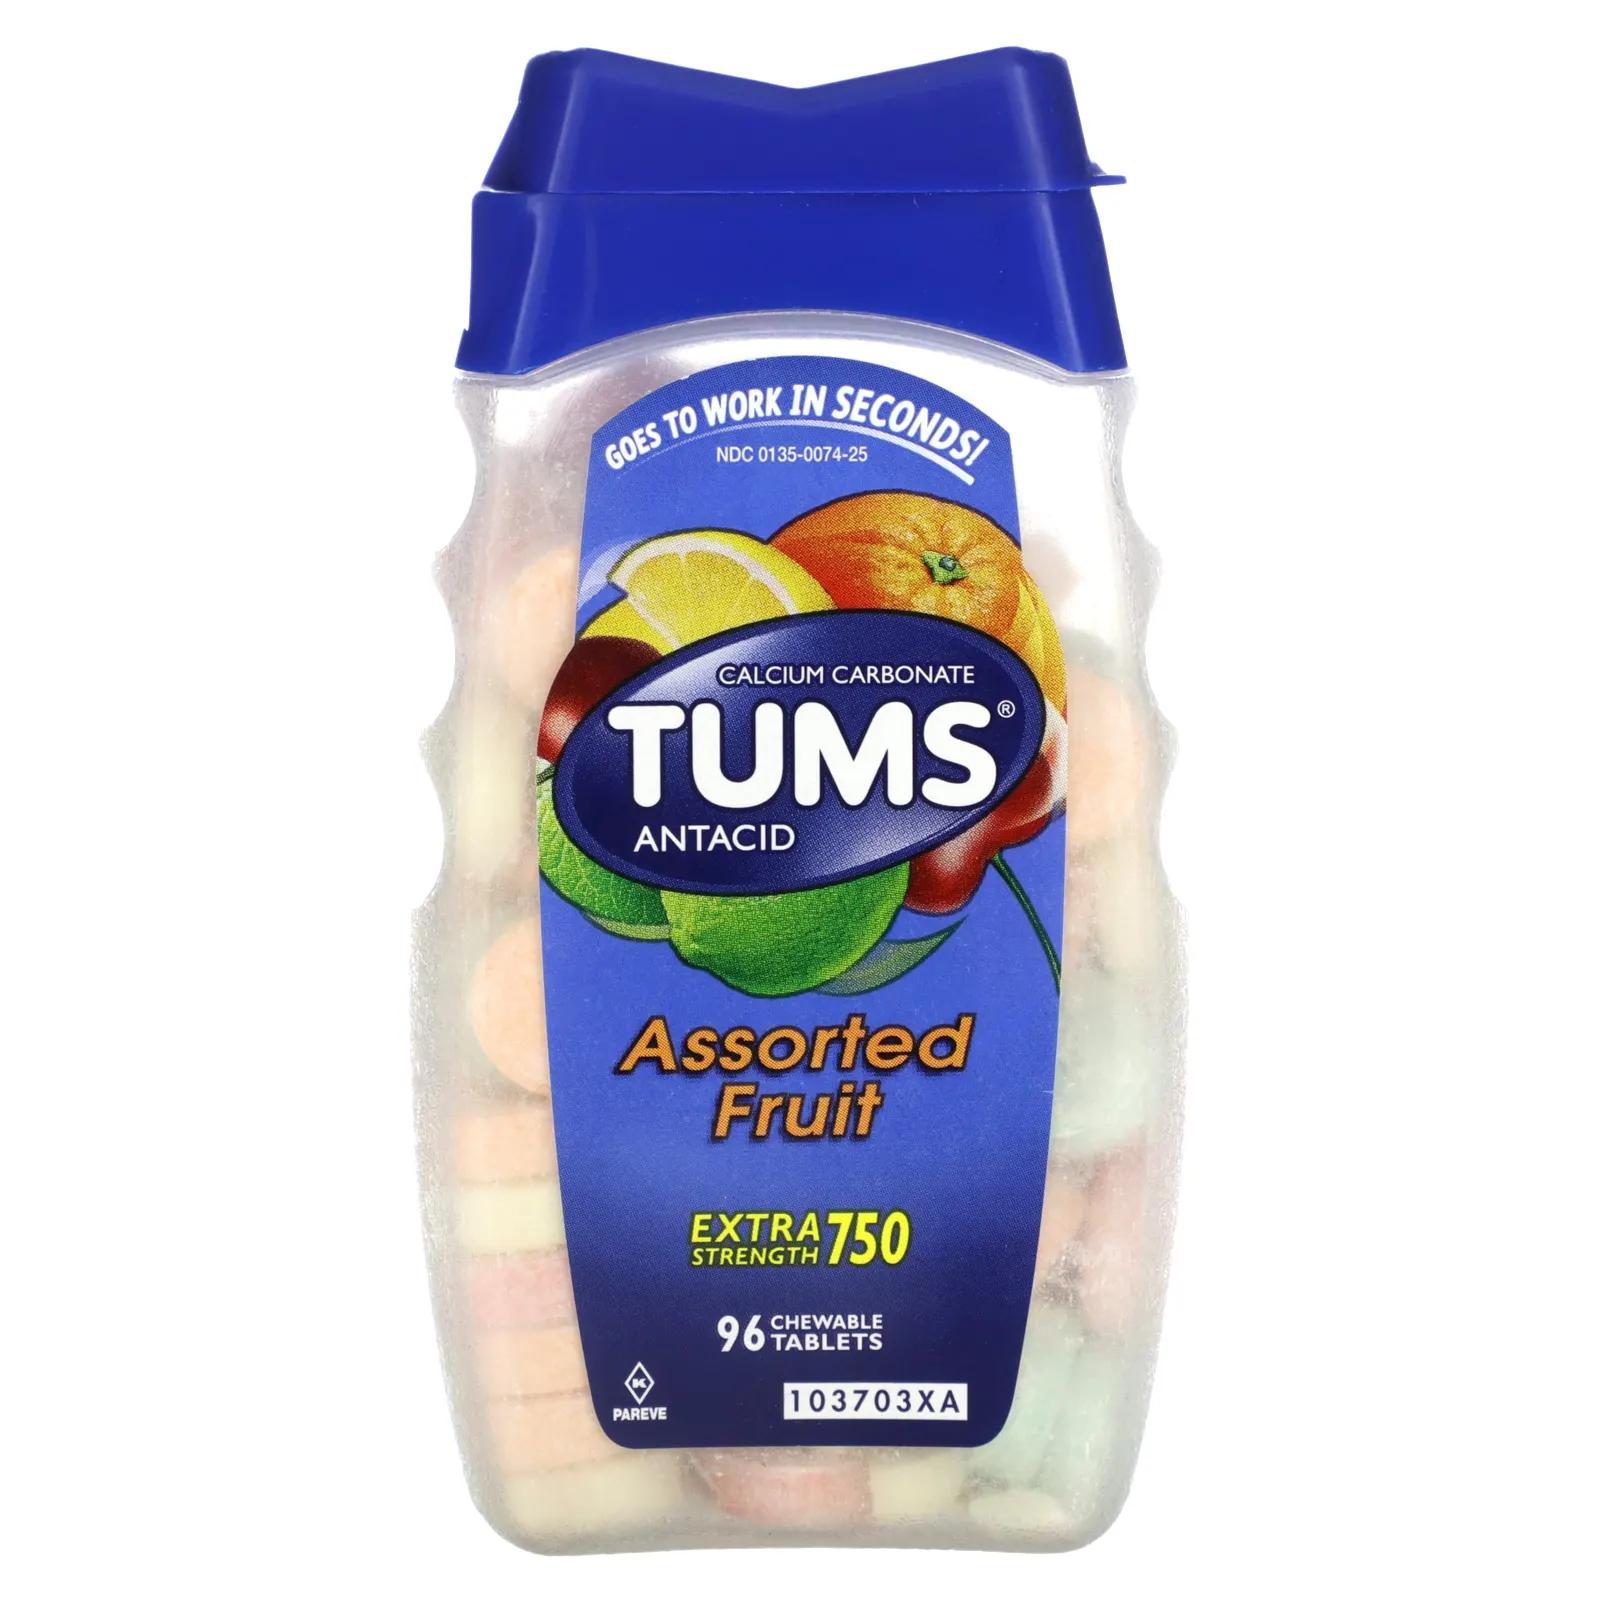 Tums TUMS Extra Strength 750 Антацидное средство Фруктовое ассорти 96 таблеток